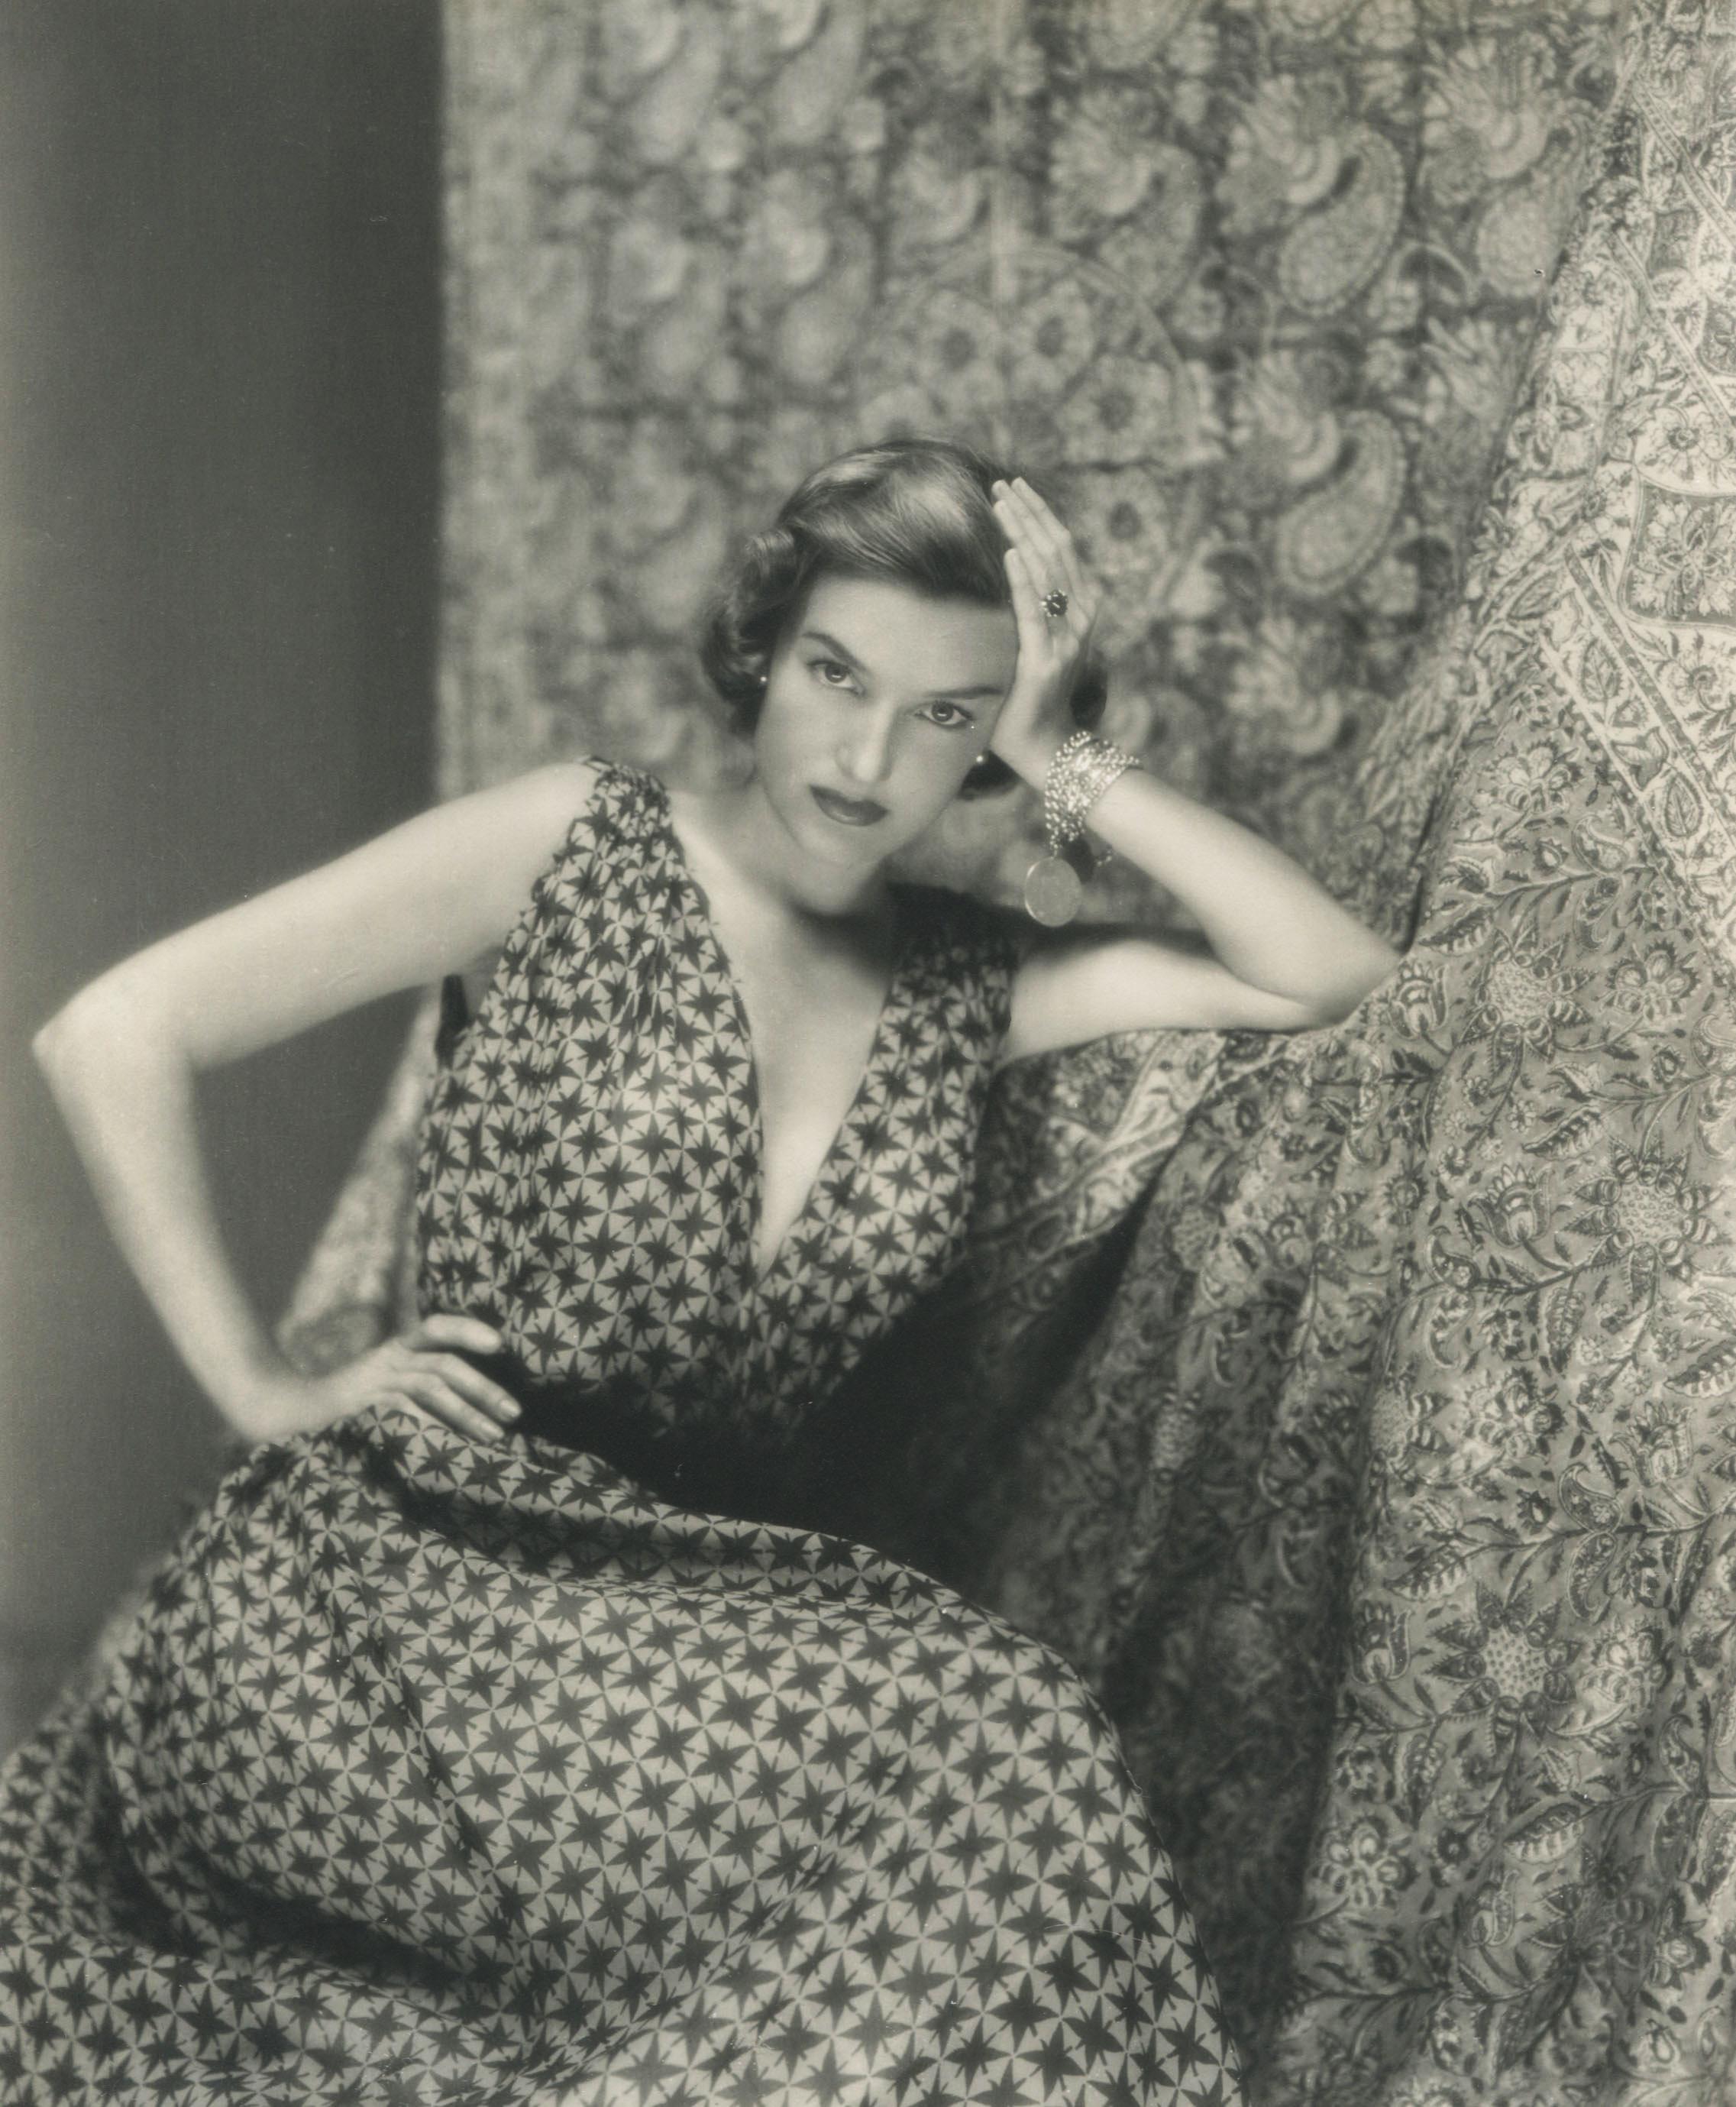 Woman in Patterned Dress - Photograph by George Platt Lynes